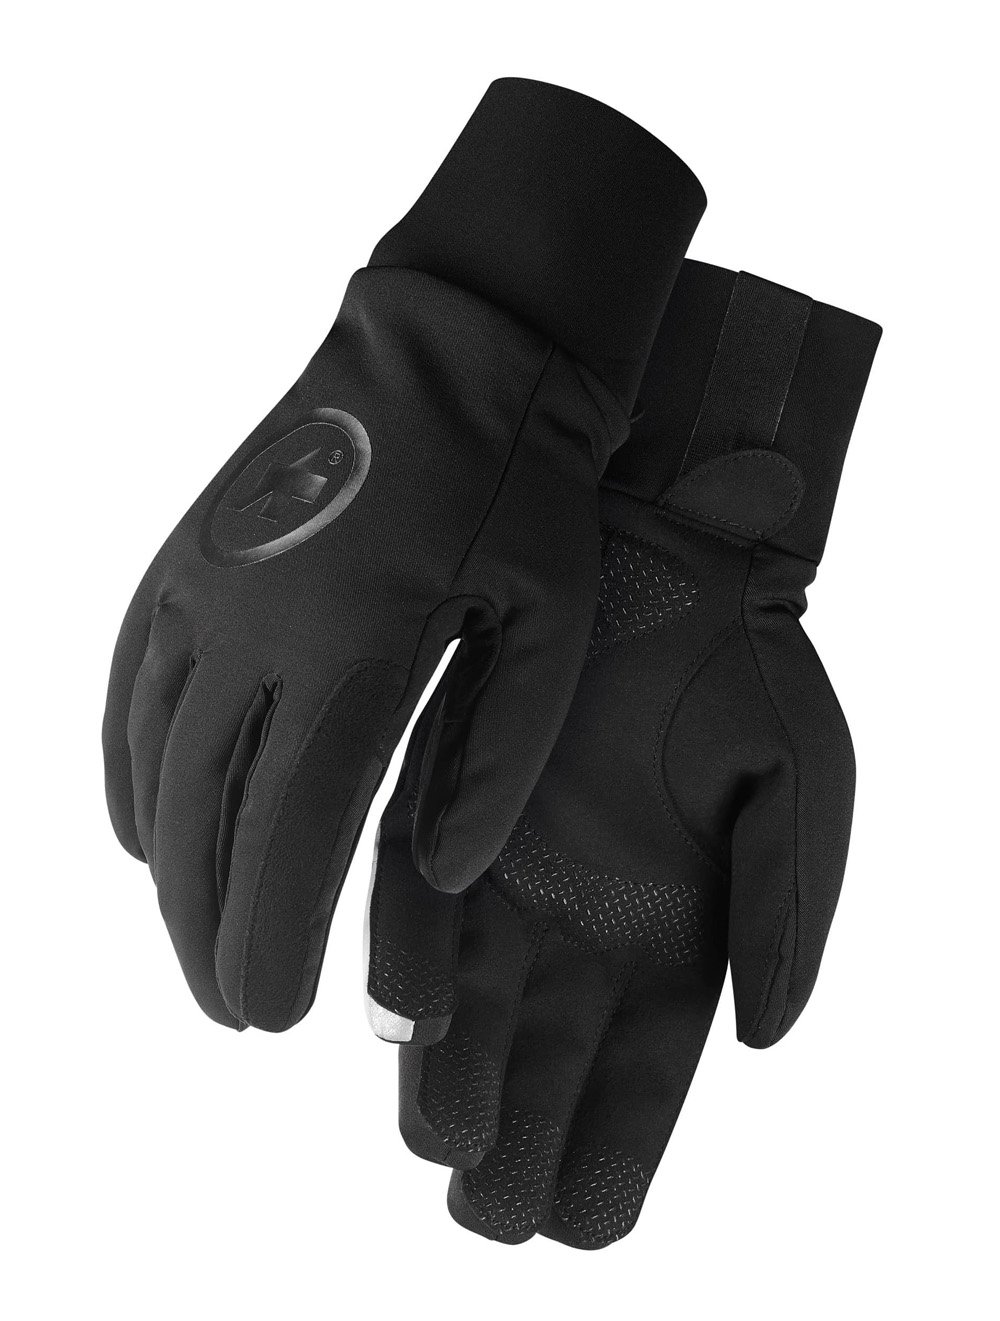 Assos Ultraz Winter Cycle Gloves - Bikable